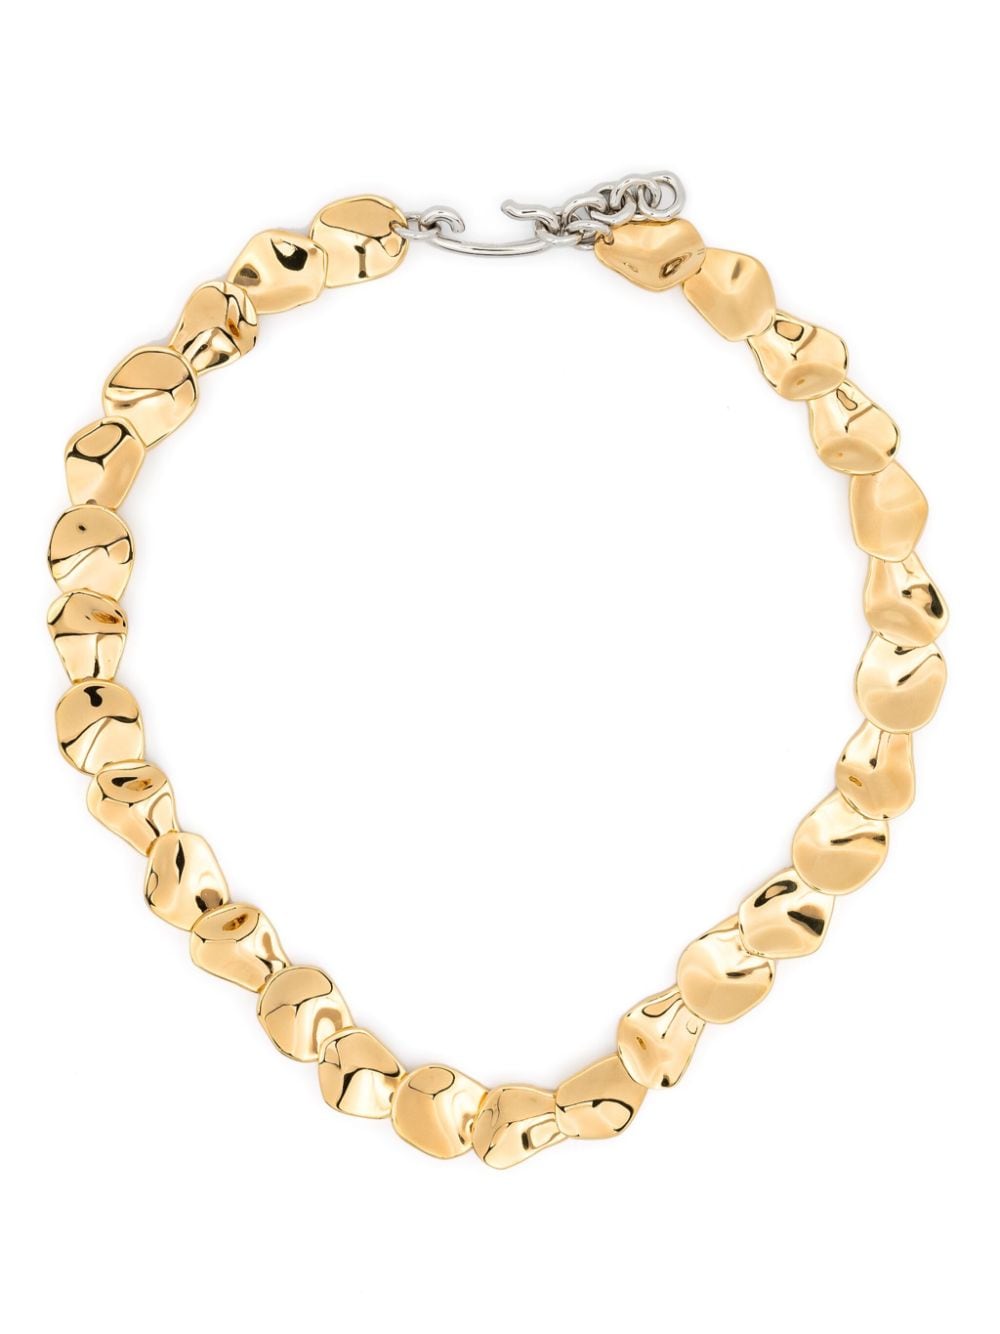 Petals eco brass necklace